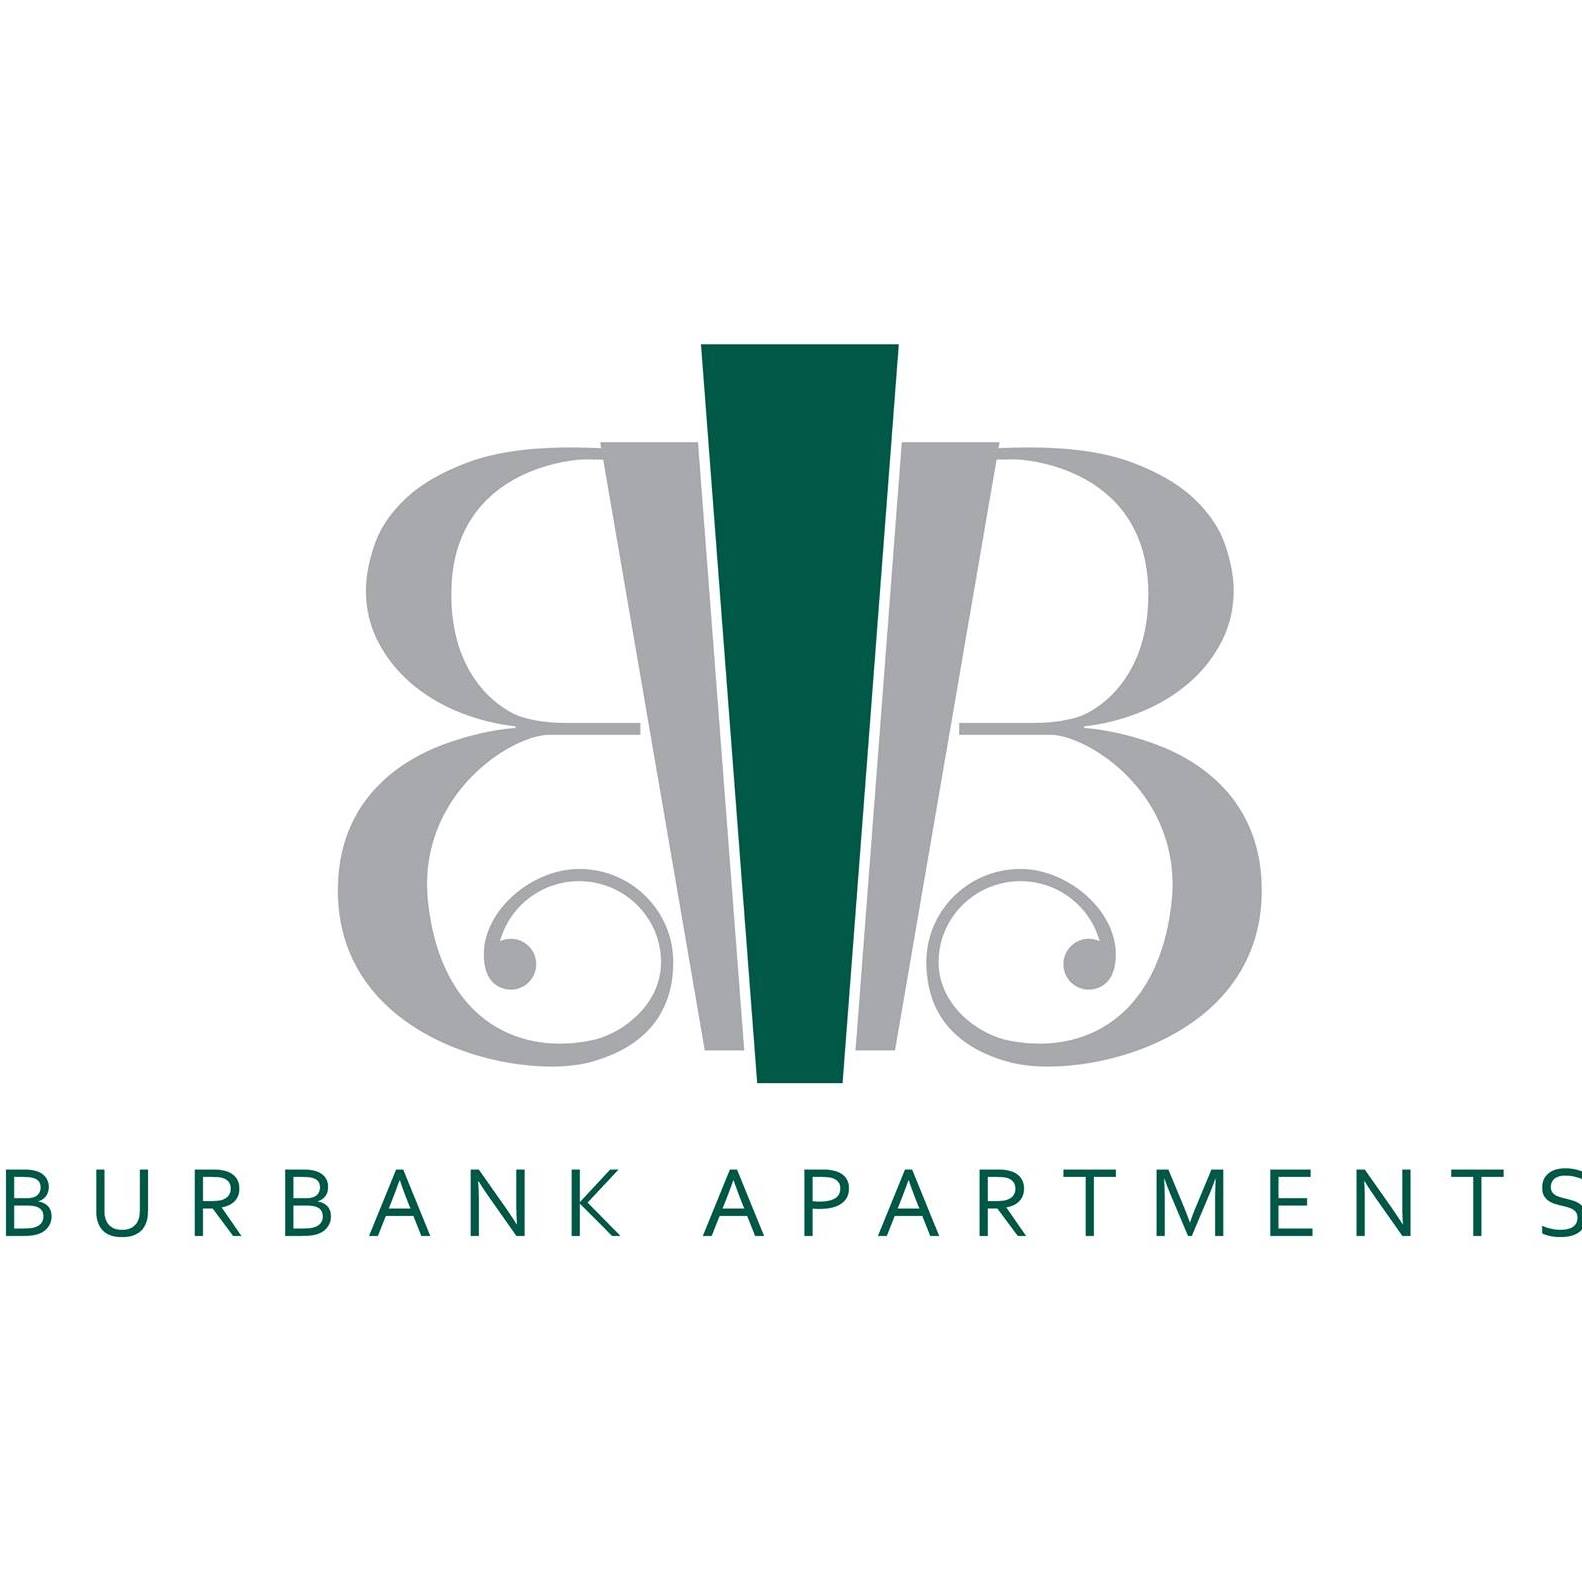 Burbank Apartments